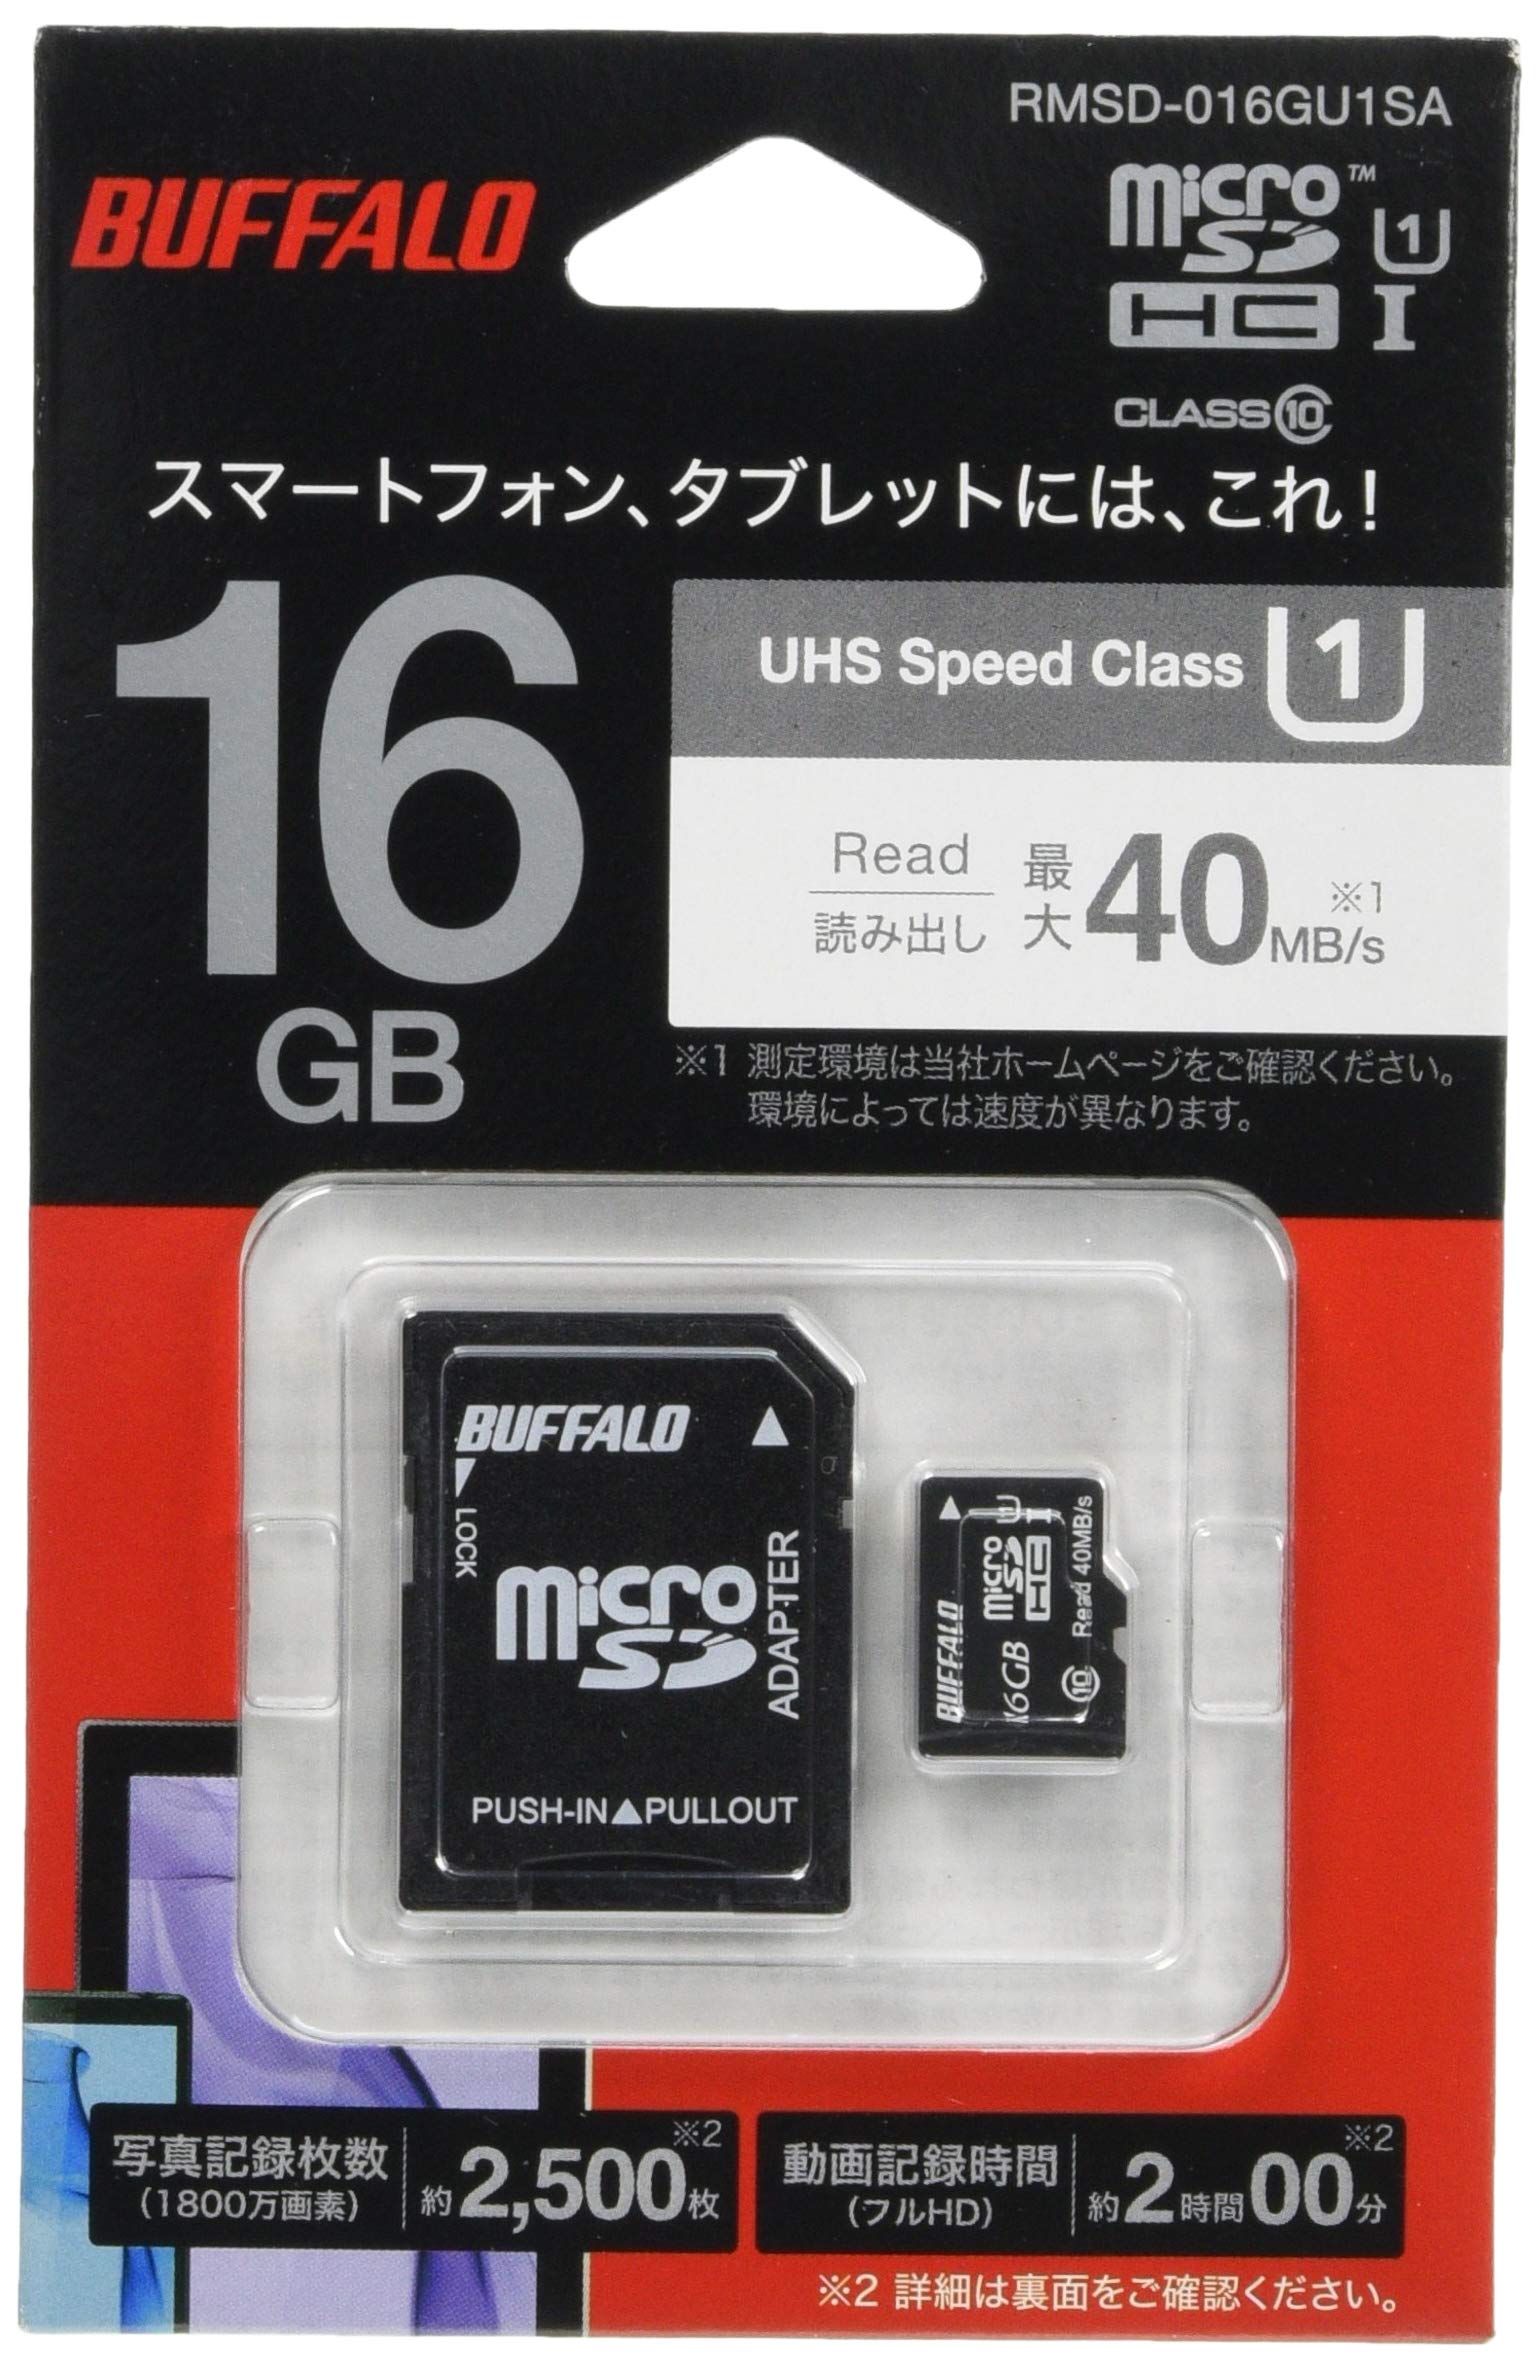 BUFFALO UHS-I Class1 microSDカード SD変換アダプター付 16GB RMSD-016GU1SA